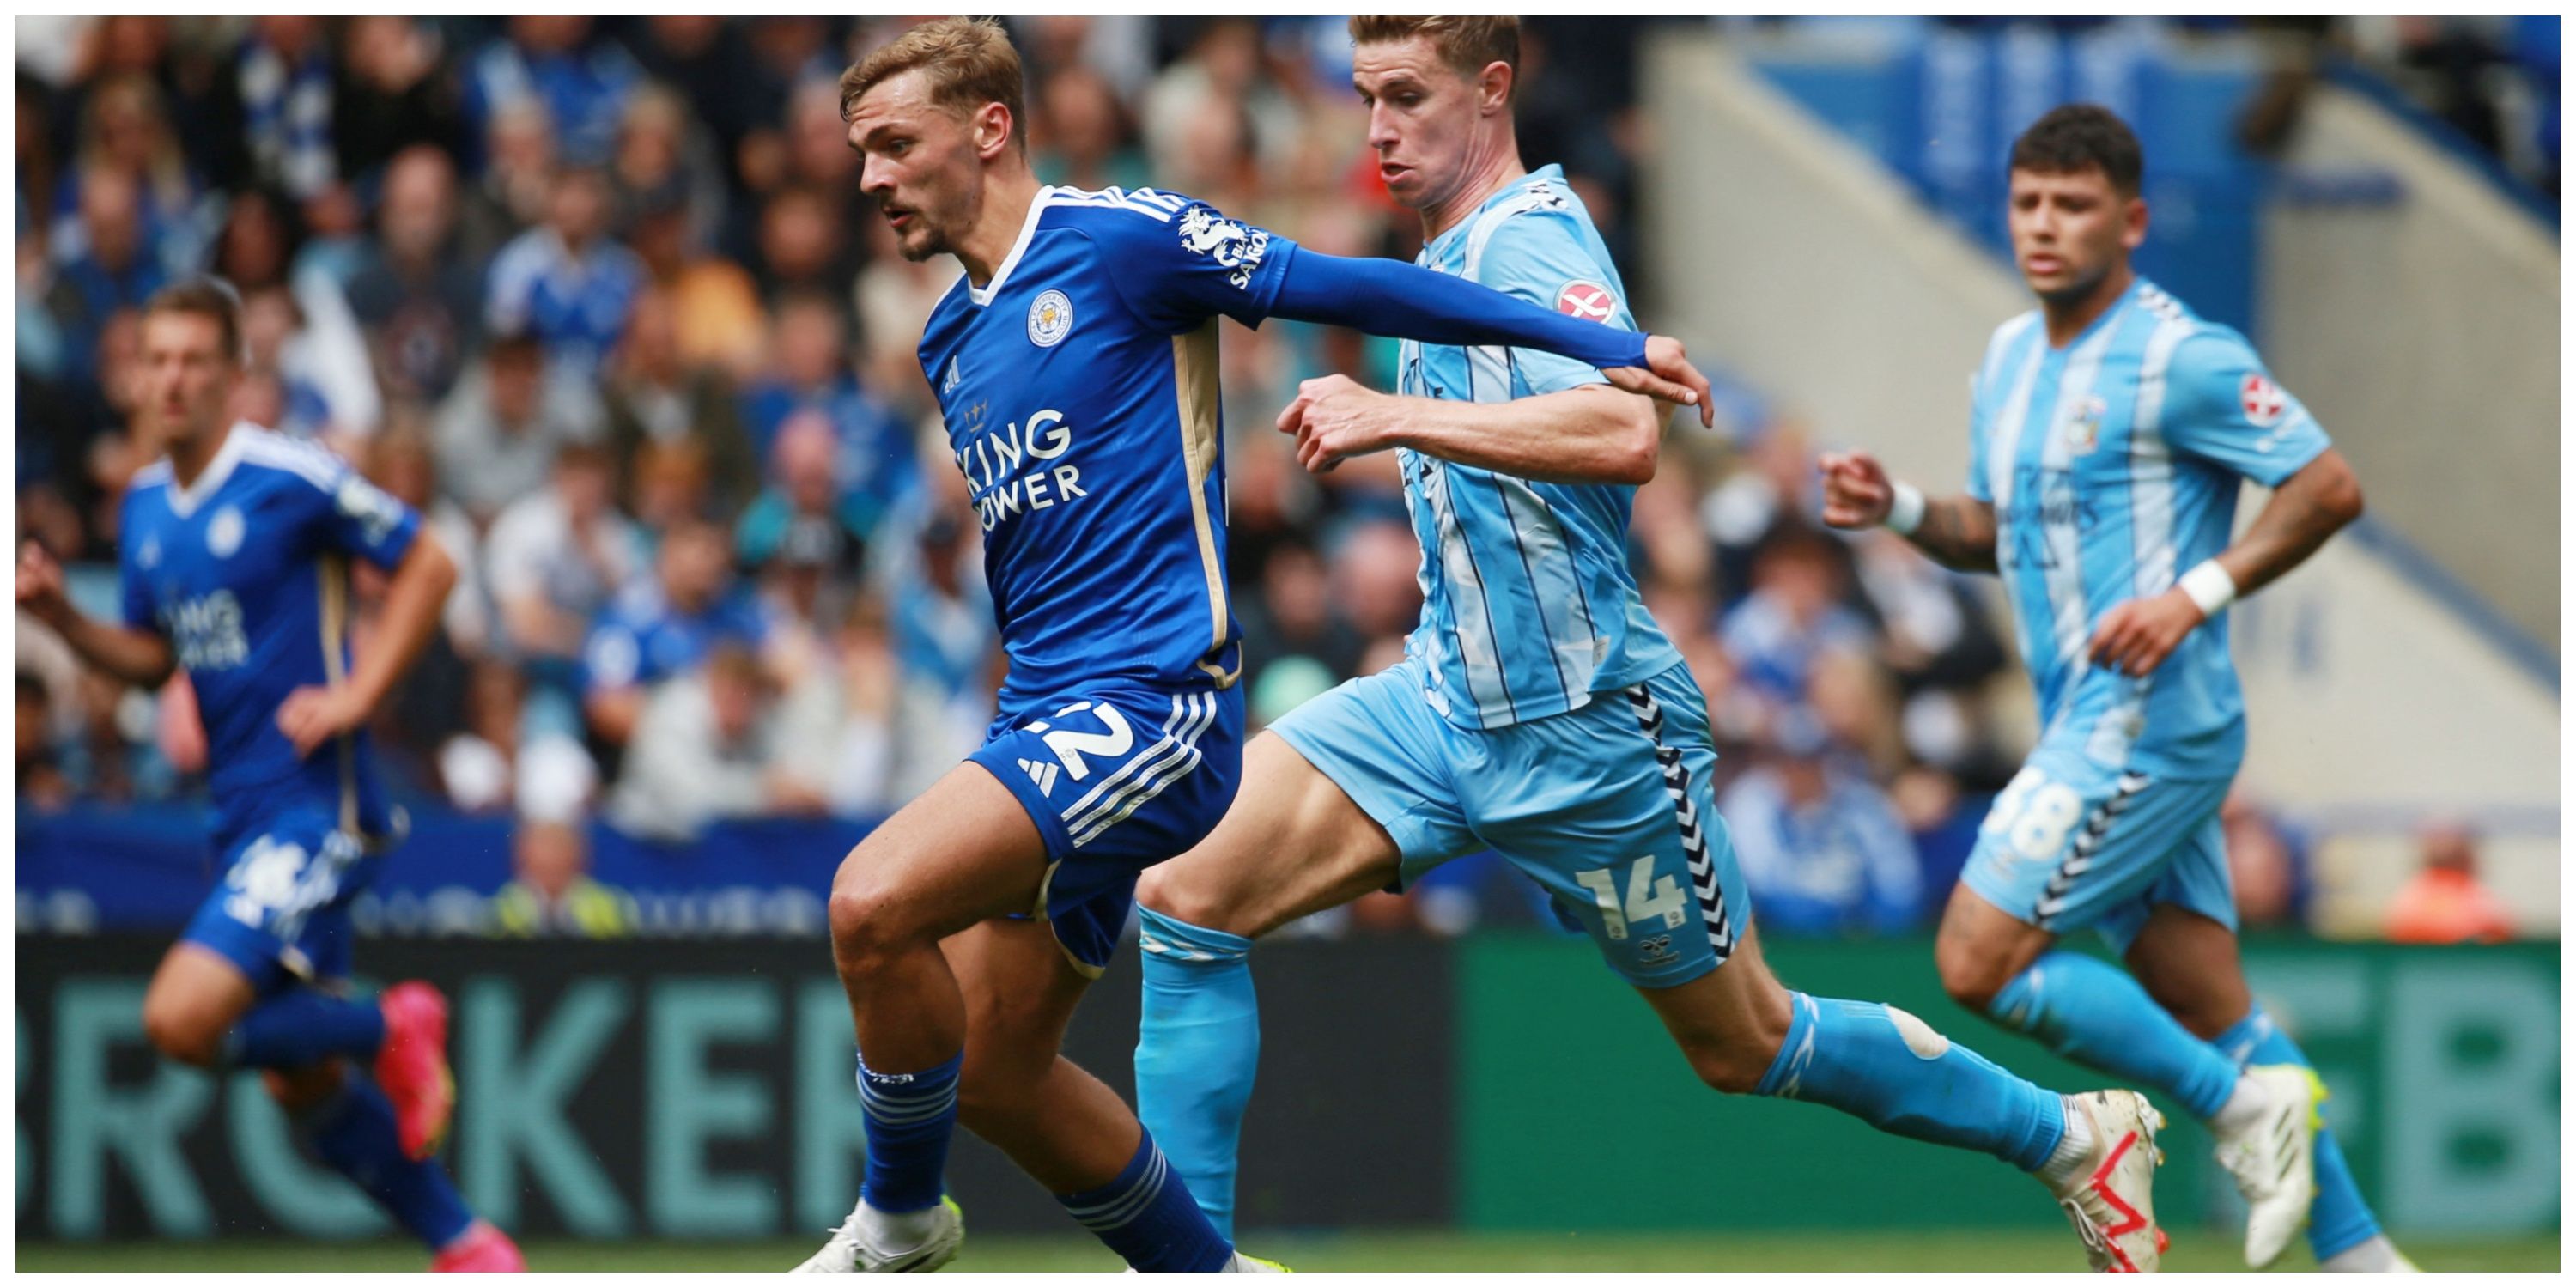 Leicester City midfielder Kiernan Dewsbury-Hall